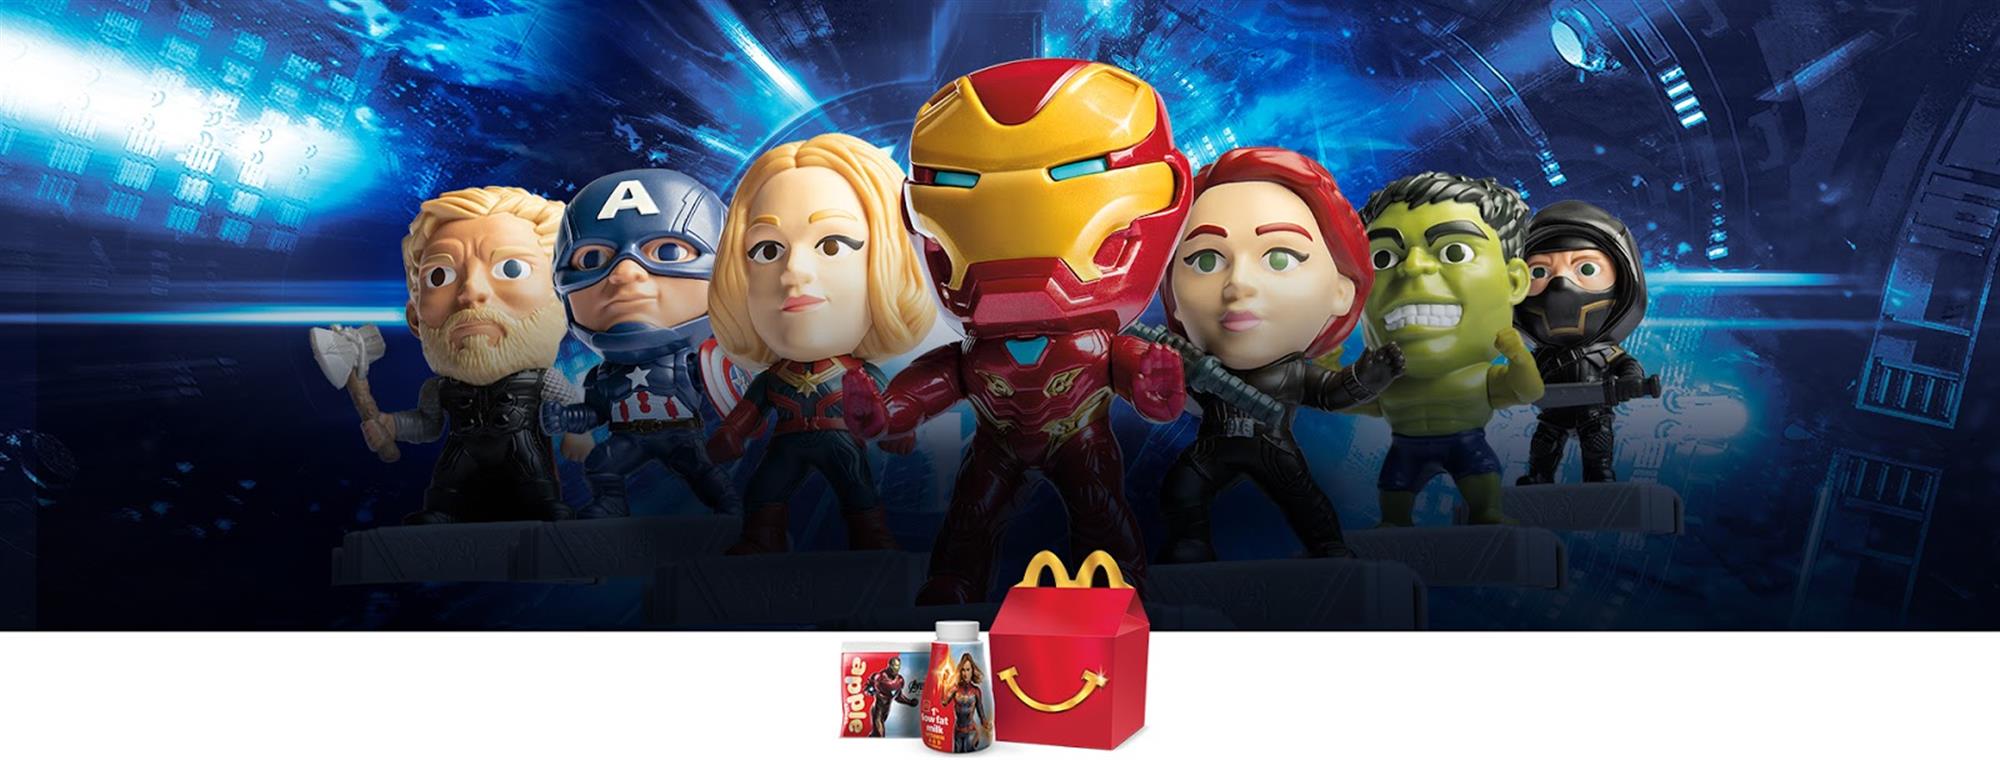 mcdonalds superhero toys 2019